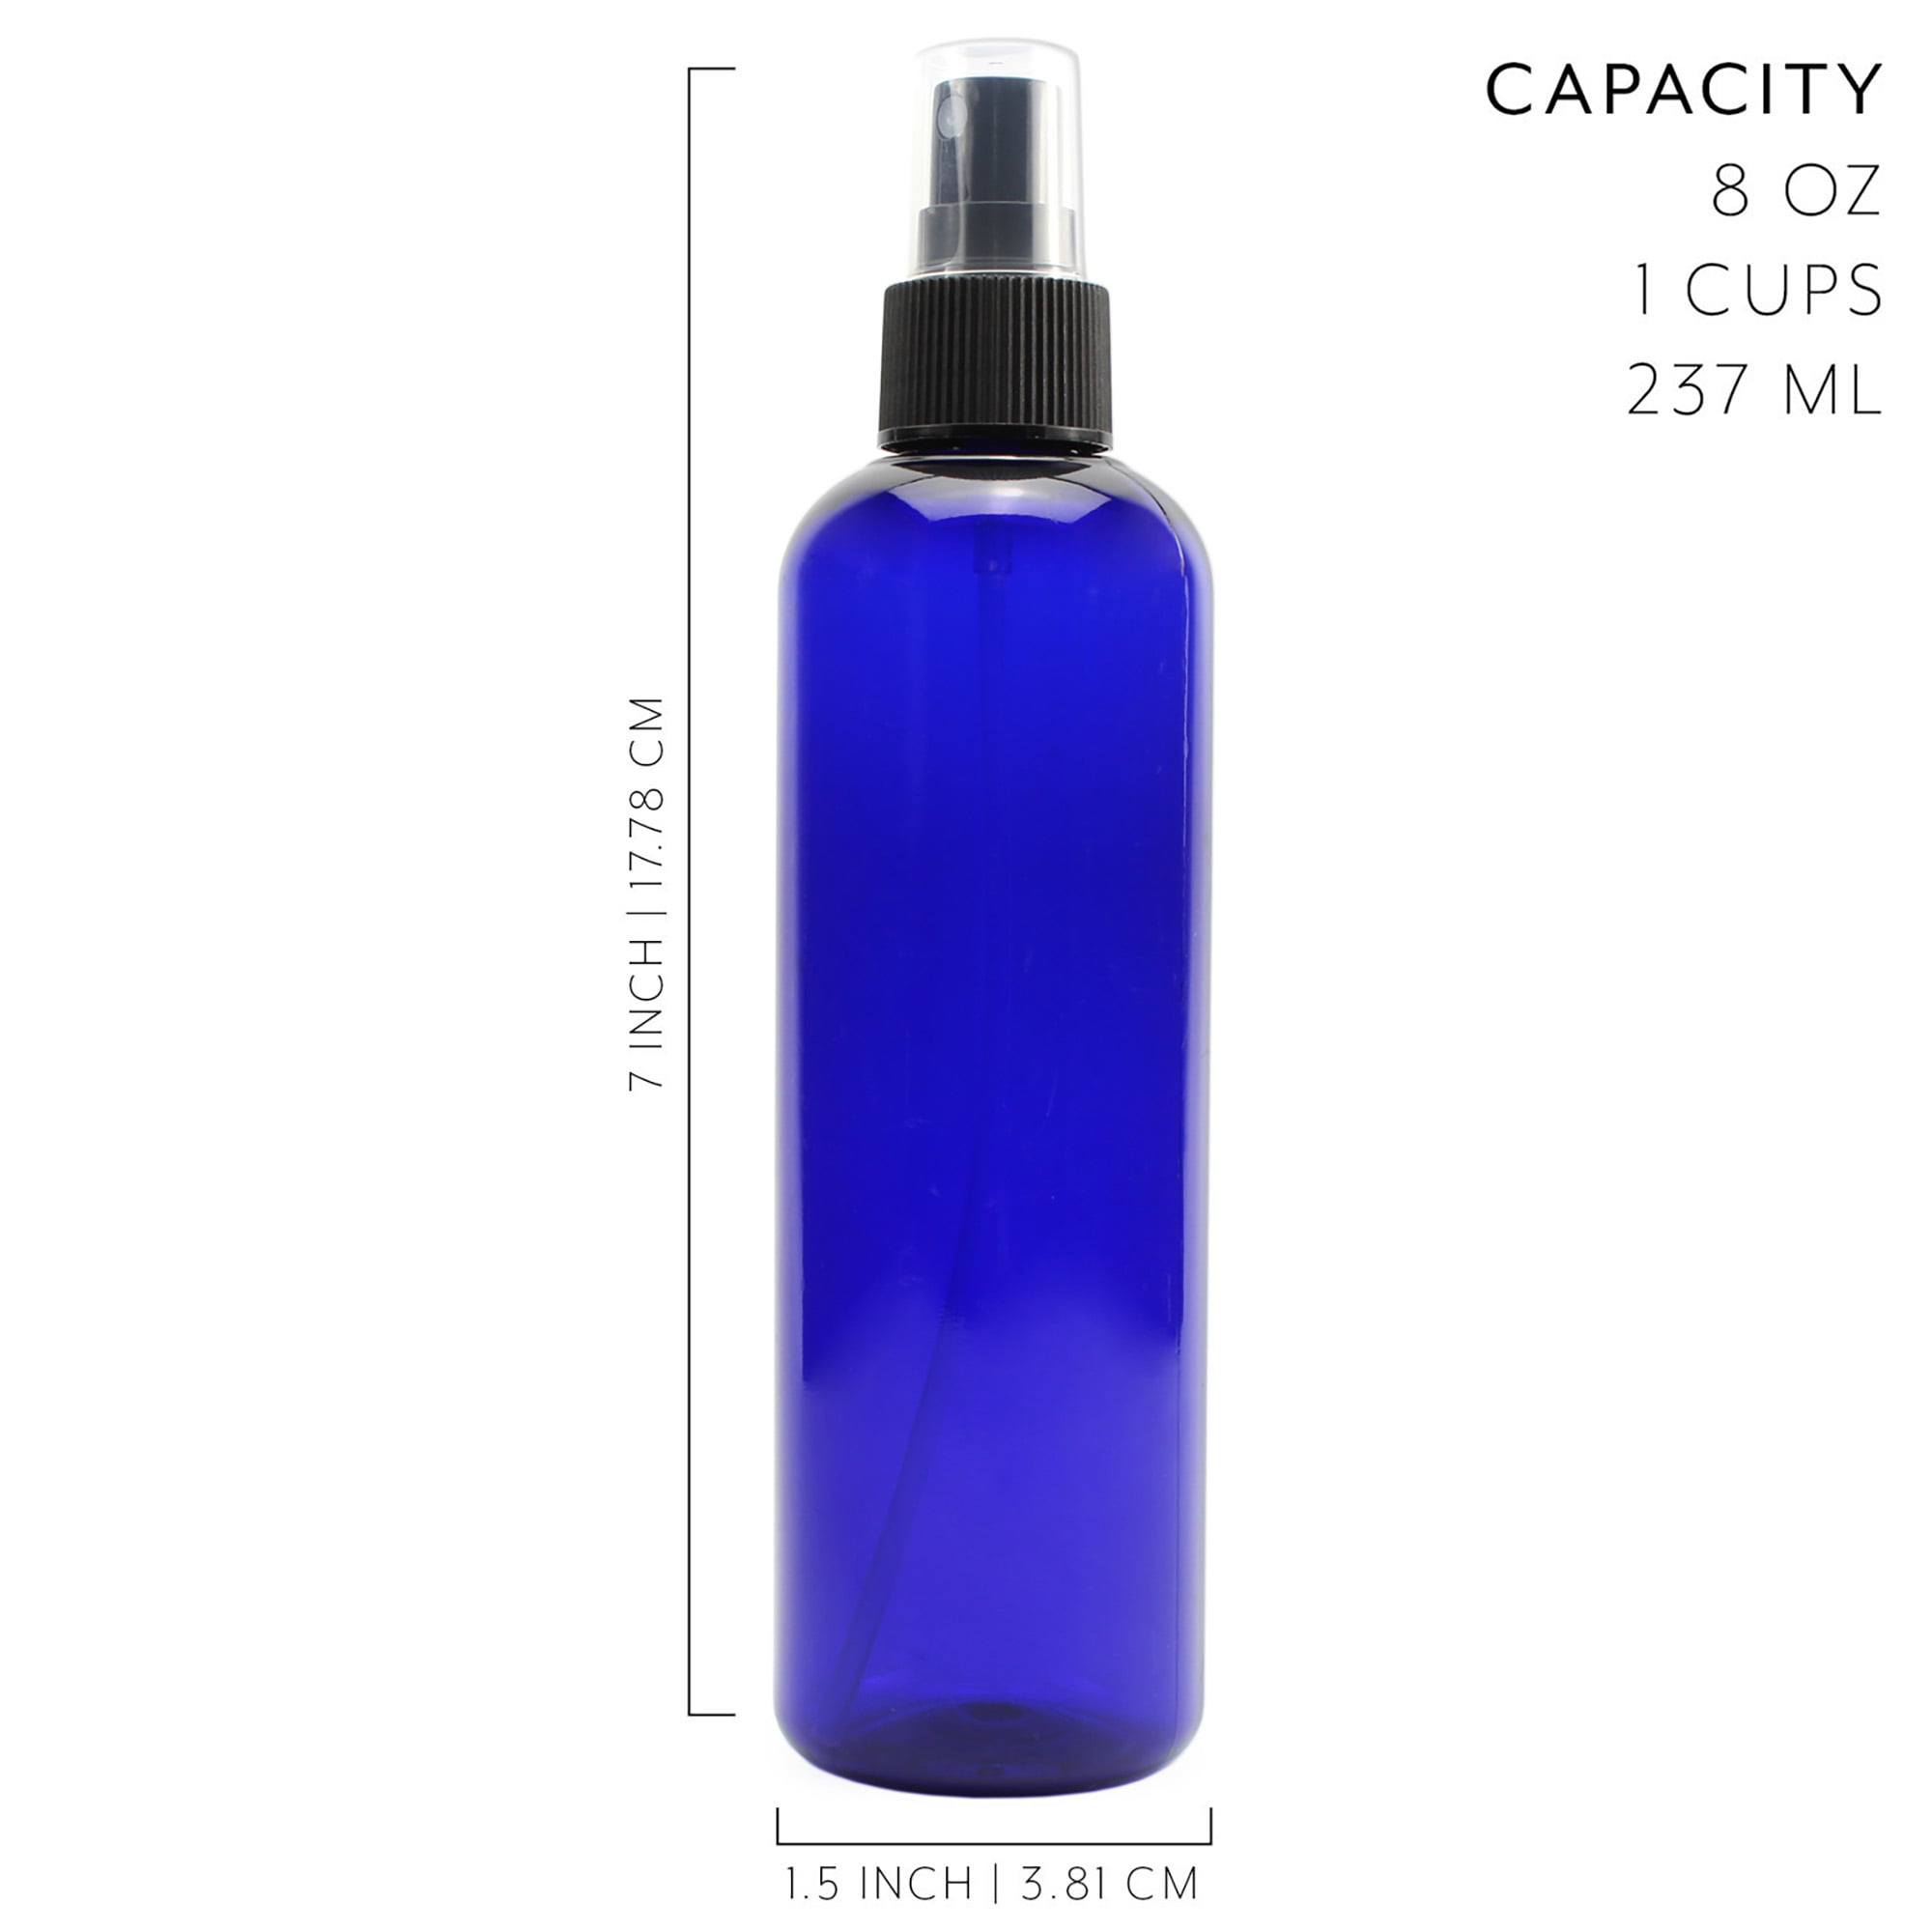 Innocent Energise Super Smoothie (PET bottle) - 8x300ml